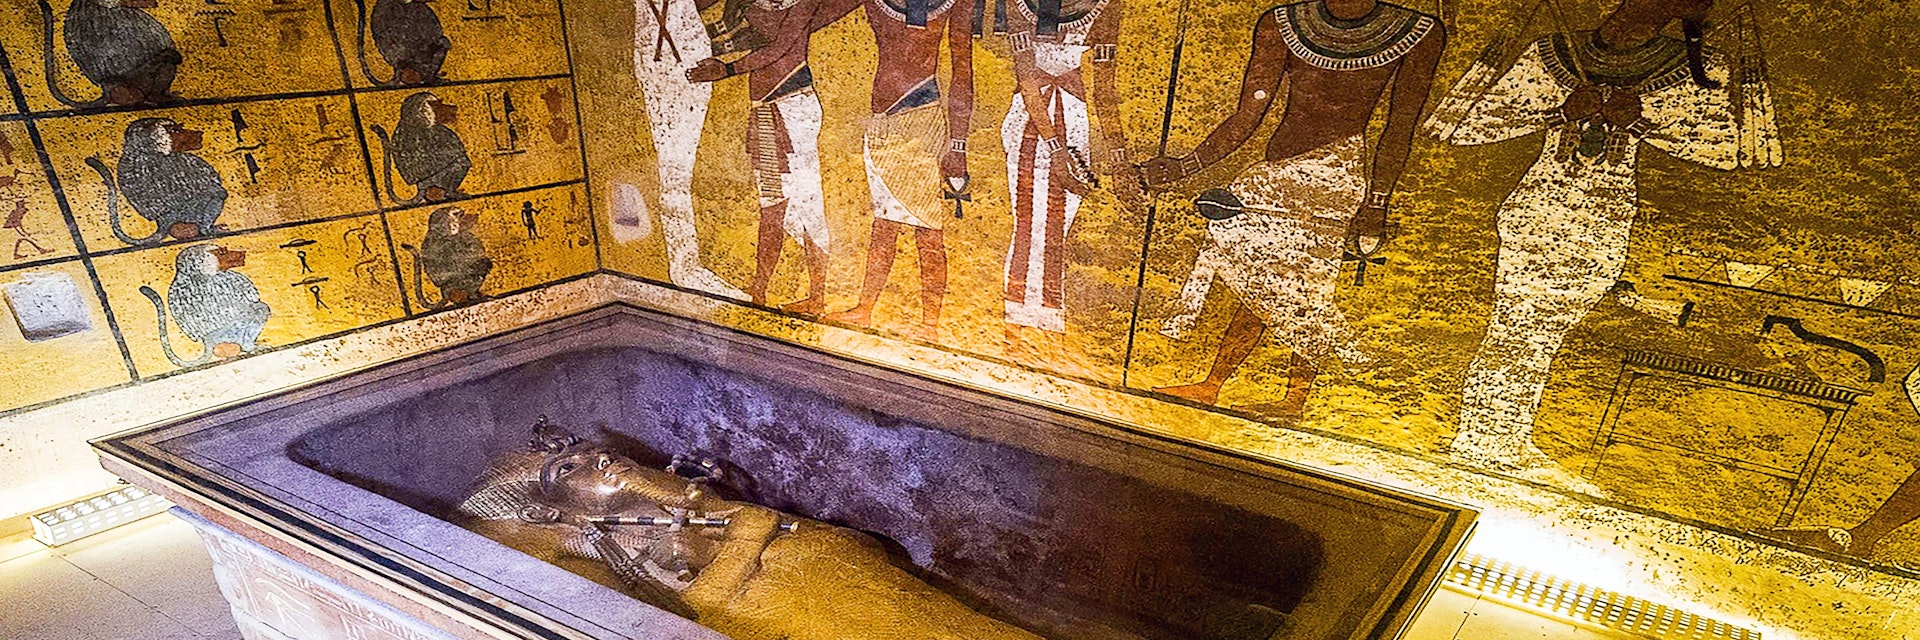 Tomb of Tutankhamun, Luxor, Egypt.